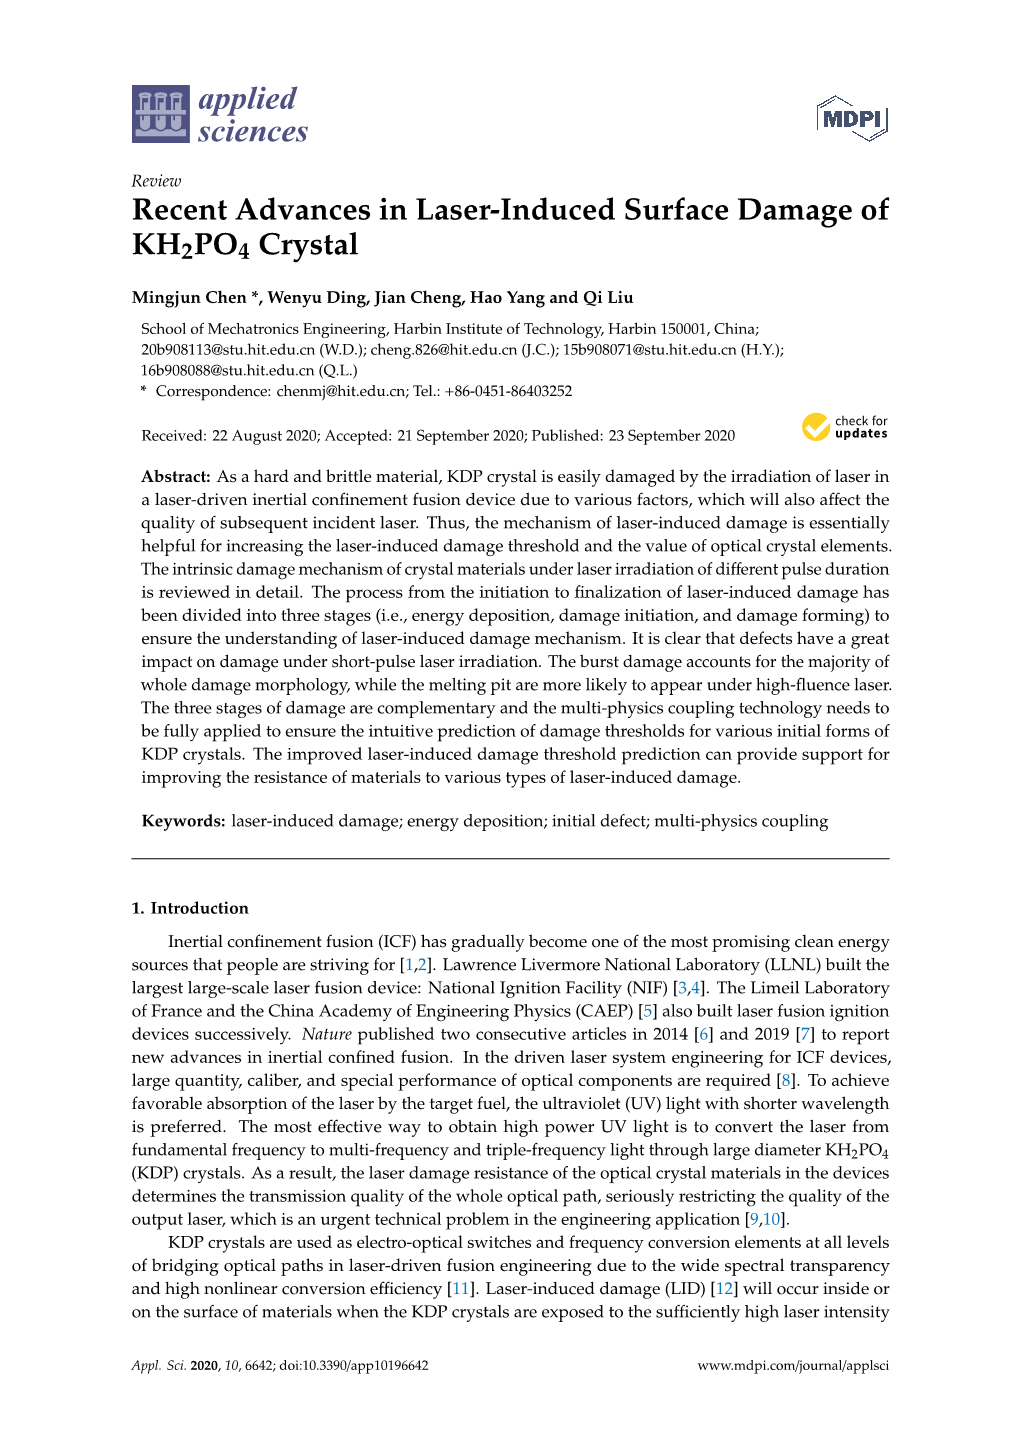 Recent Advances in Laser-Induced Surface Damage of KH2PO4 Crystal